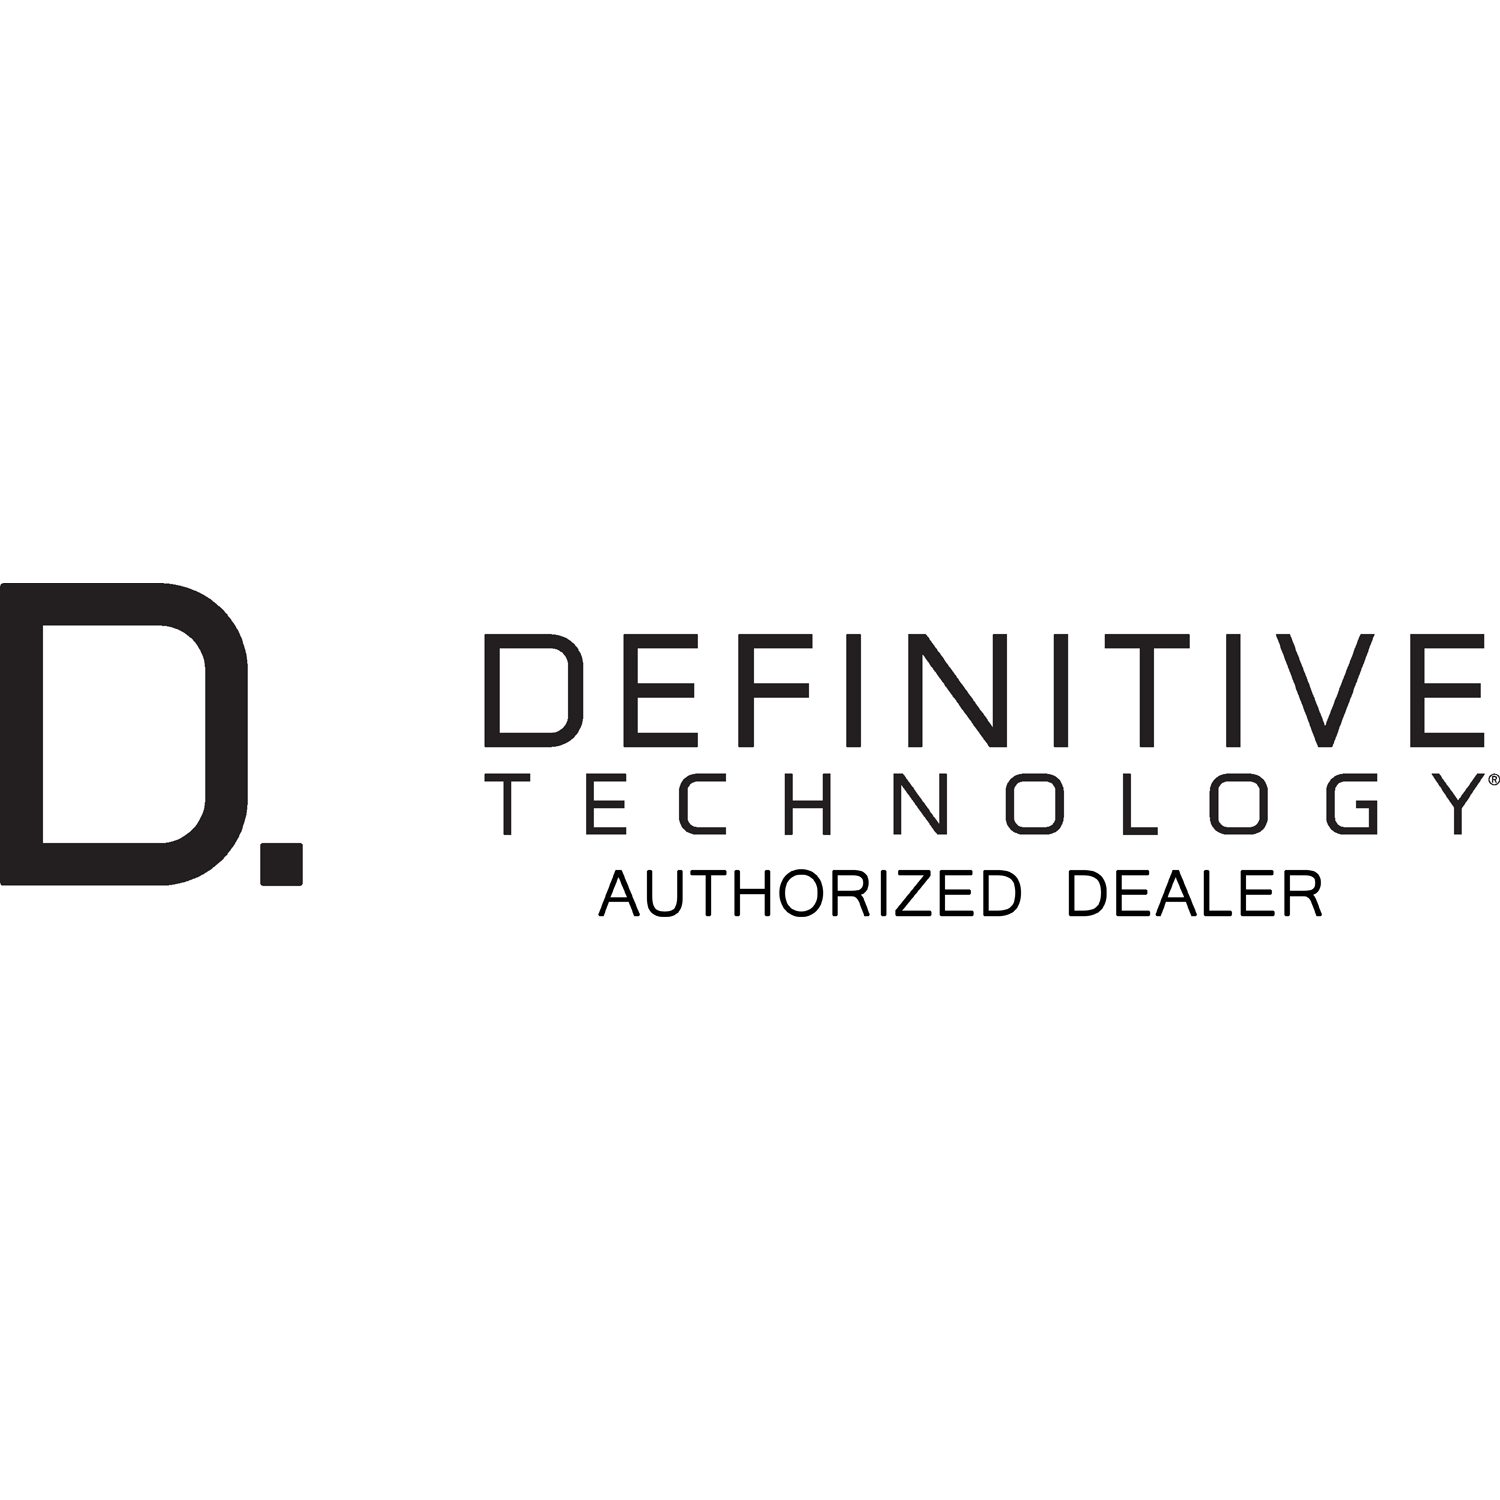 DEFINITIVE TECHNOLOGY Authorized Dealer Logo